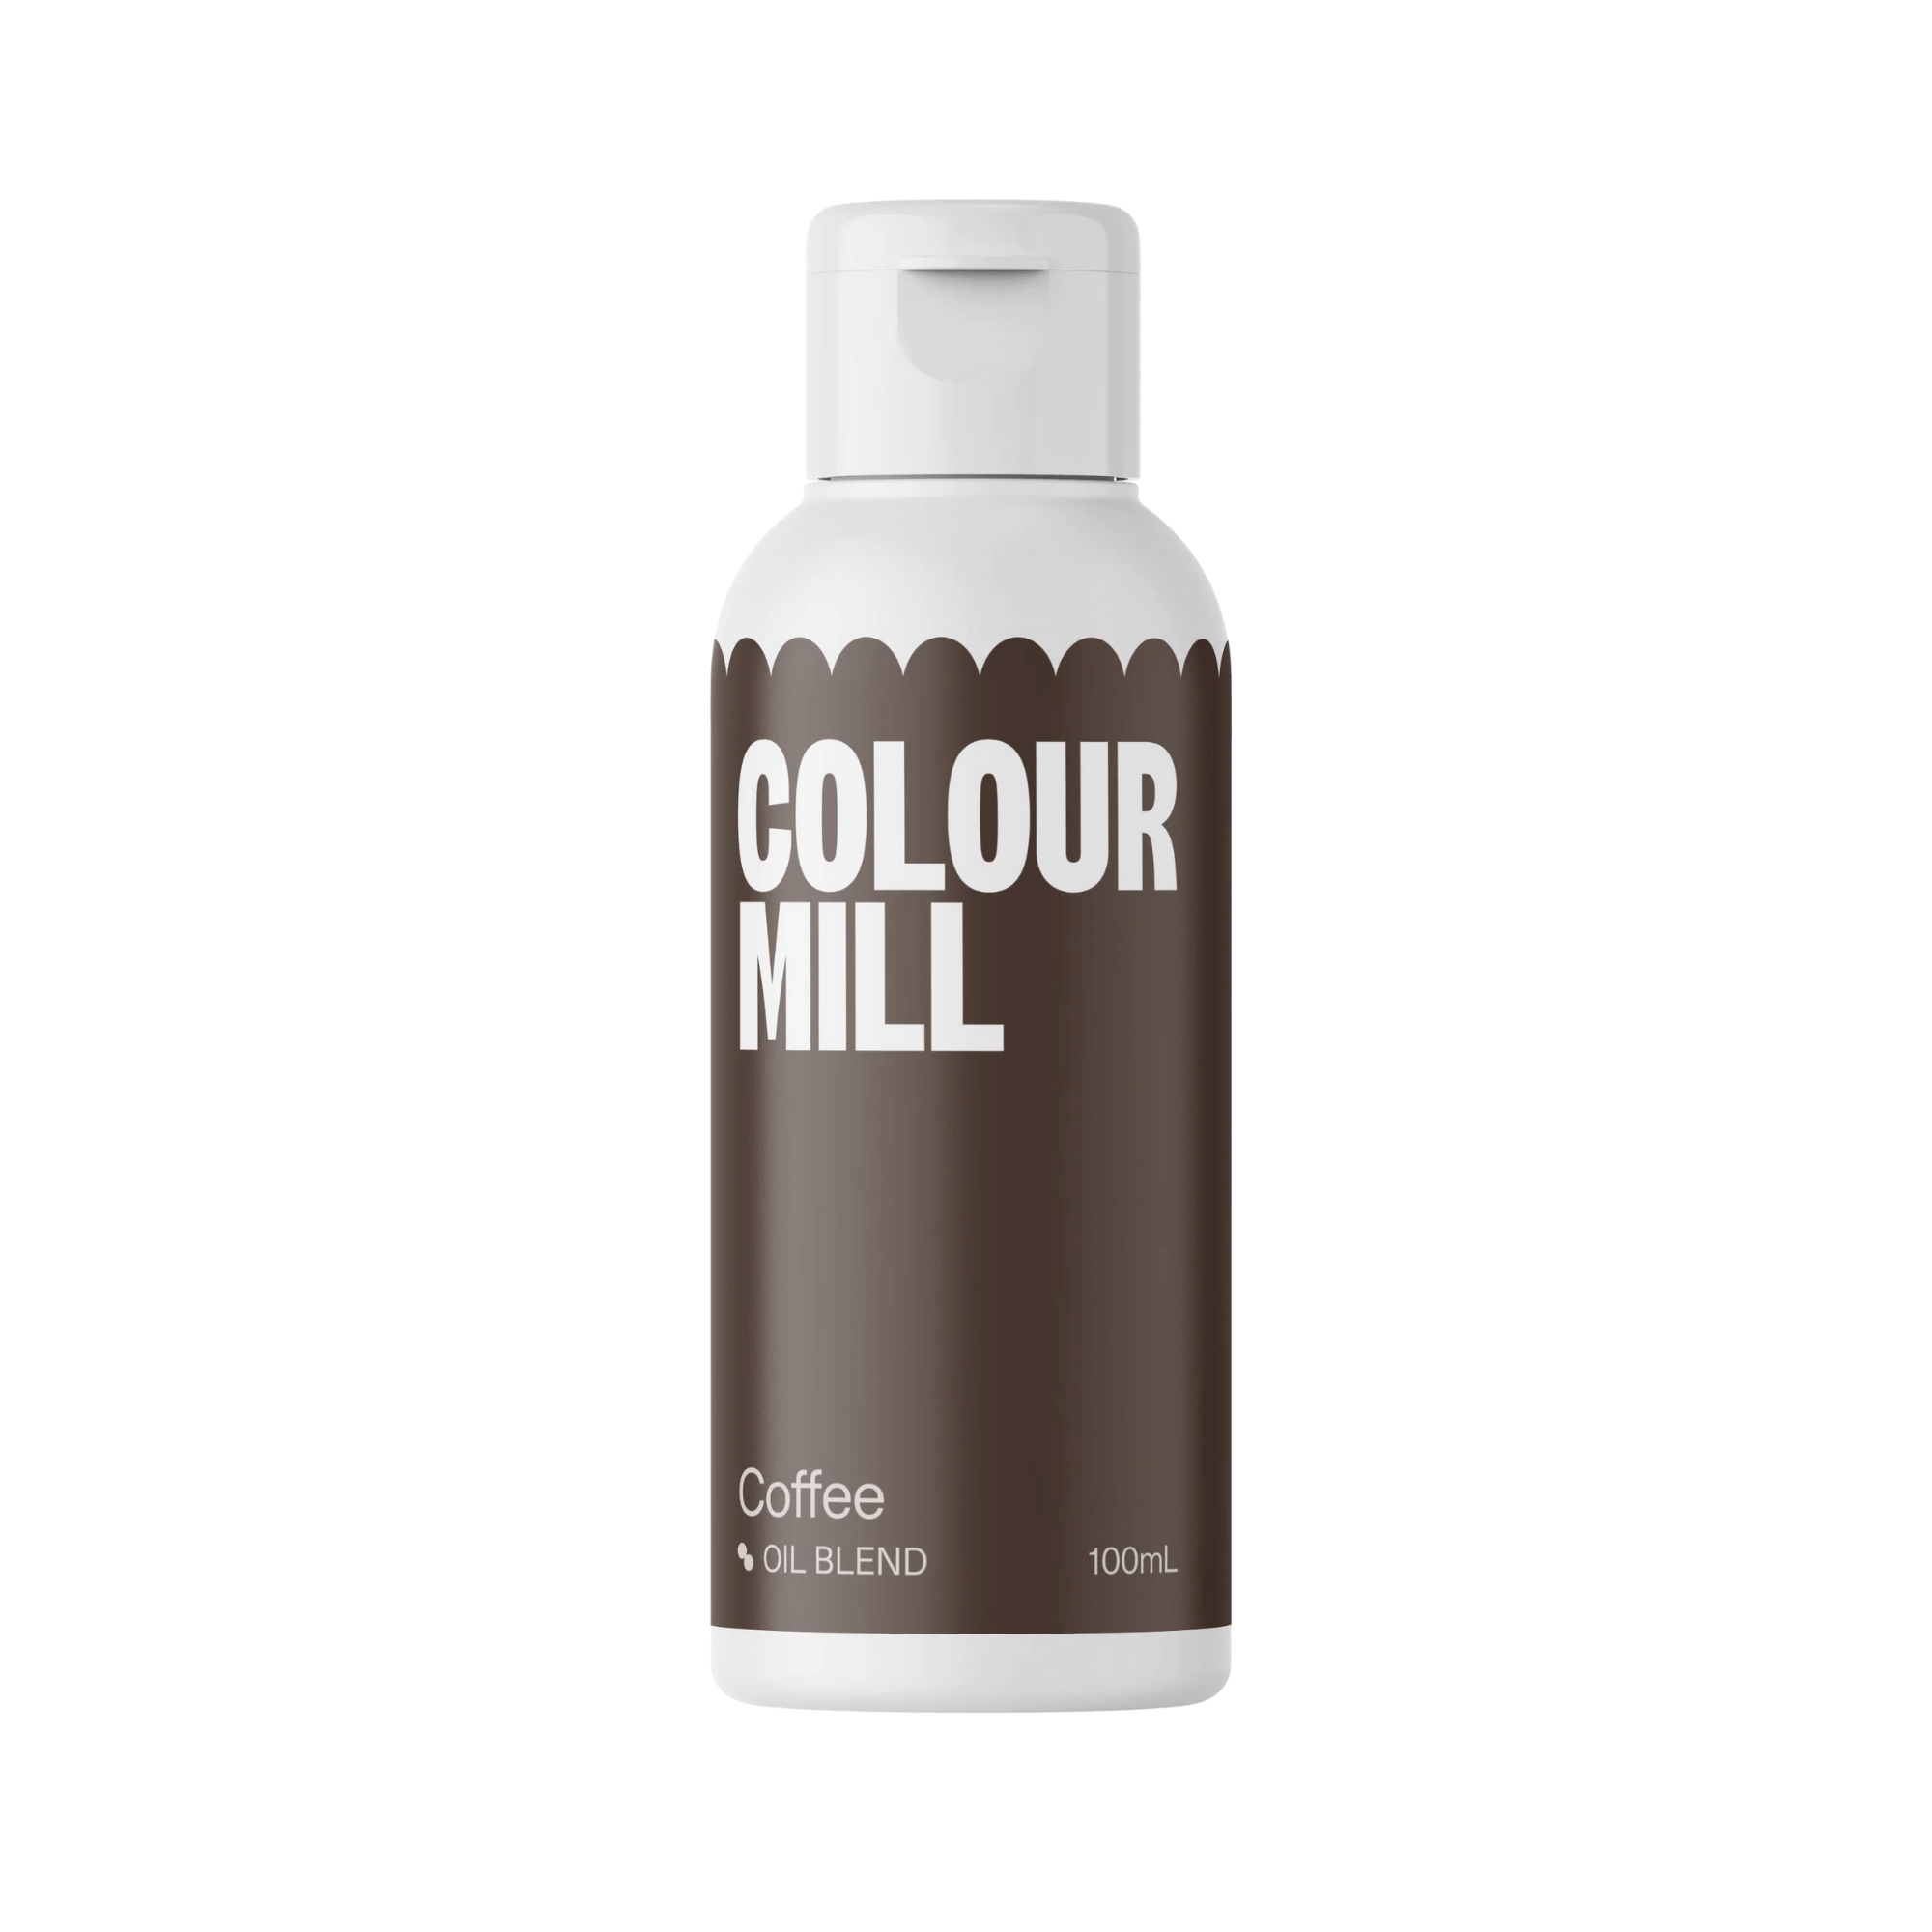 Happy Sprinkles Streusel 100ml Colour Mill Coffee - Oil Blend